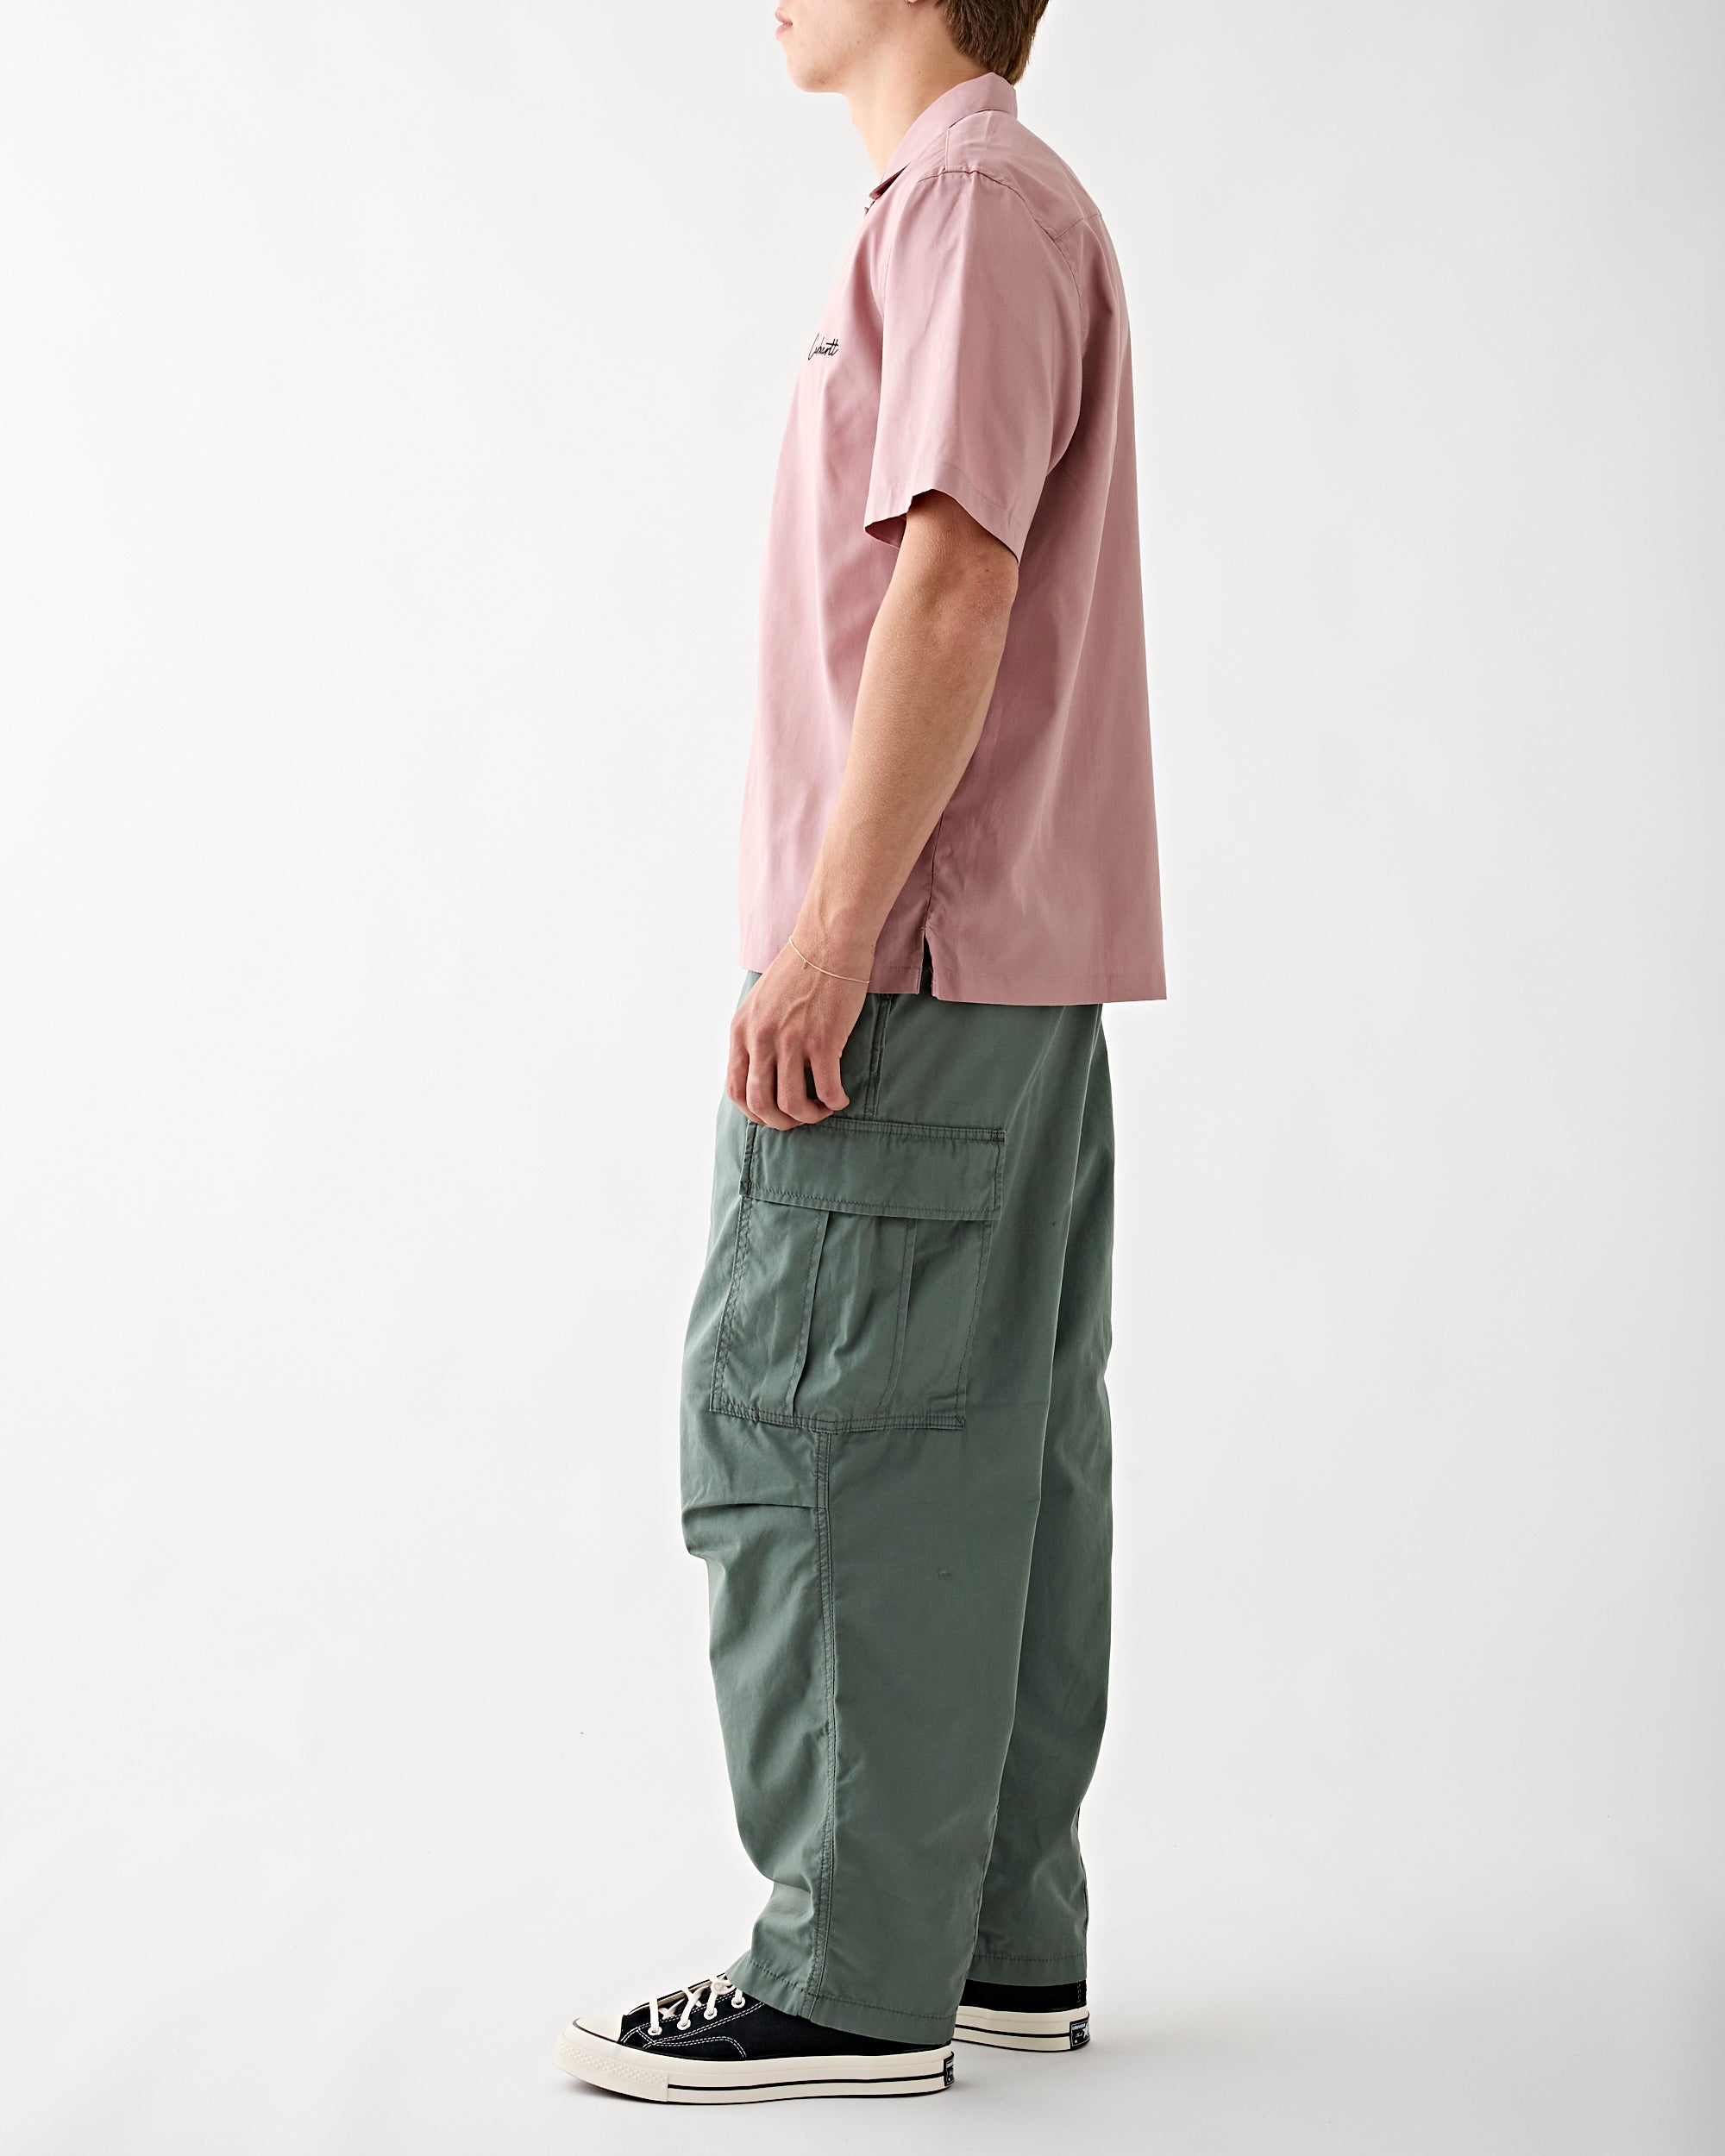 Carhartt WIP S/S Delray Shirt Glassy Pink/Black Shirt S/S Men